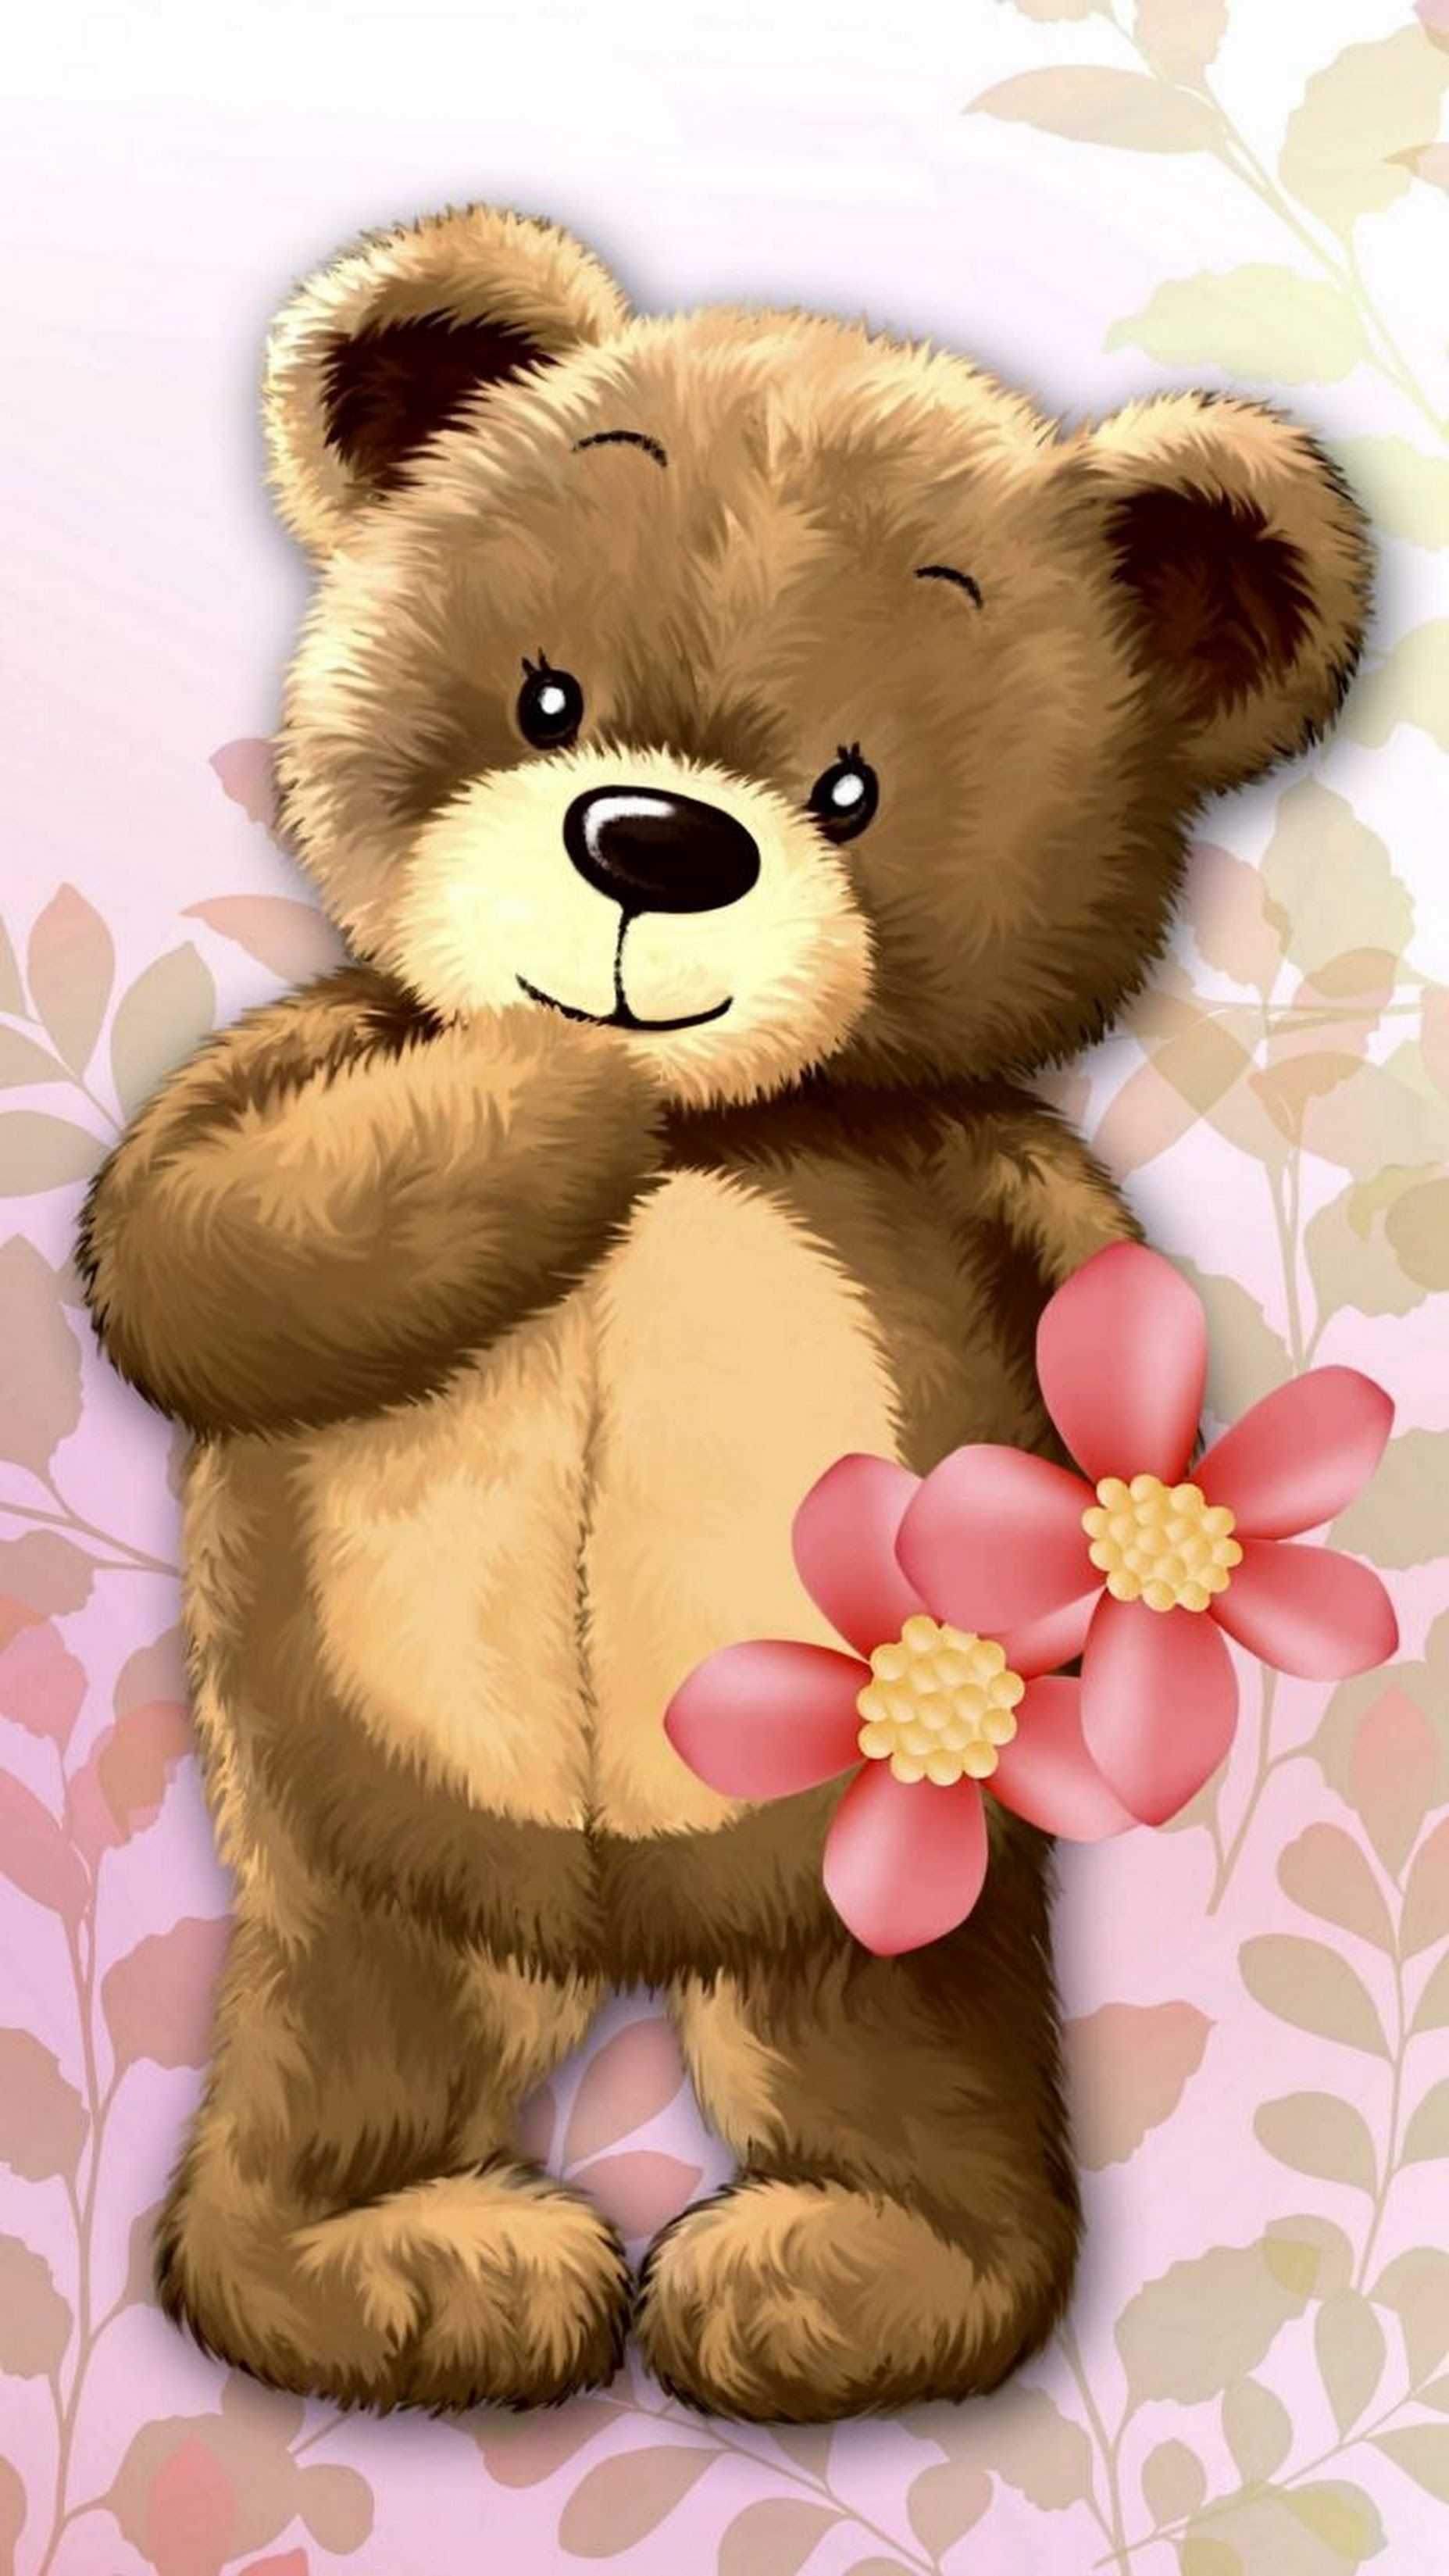 Foto Bear Wallpaper, Easter Wallpaper, Cuddling, Oso Teddy Bear Wallpaper For iPhone is free on. Teddy bear wallpaper, Teddy bear cartoon, Bear wallpaper